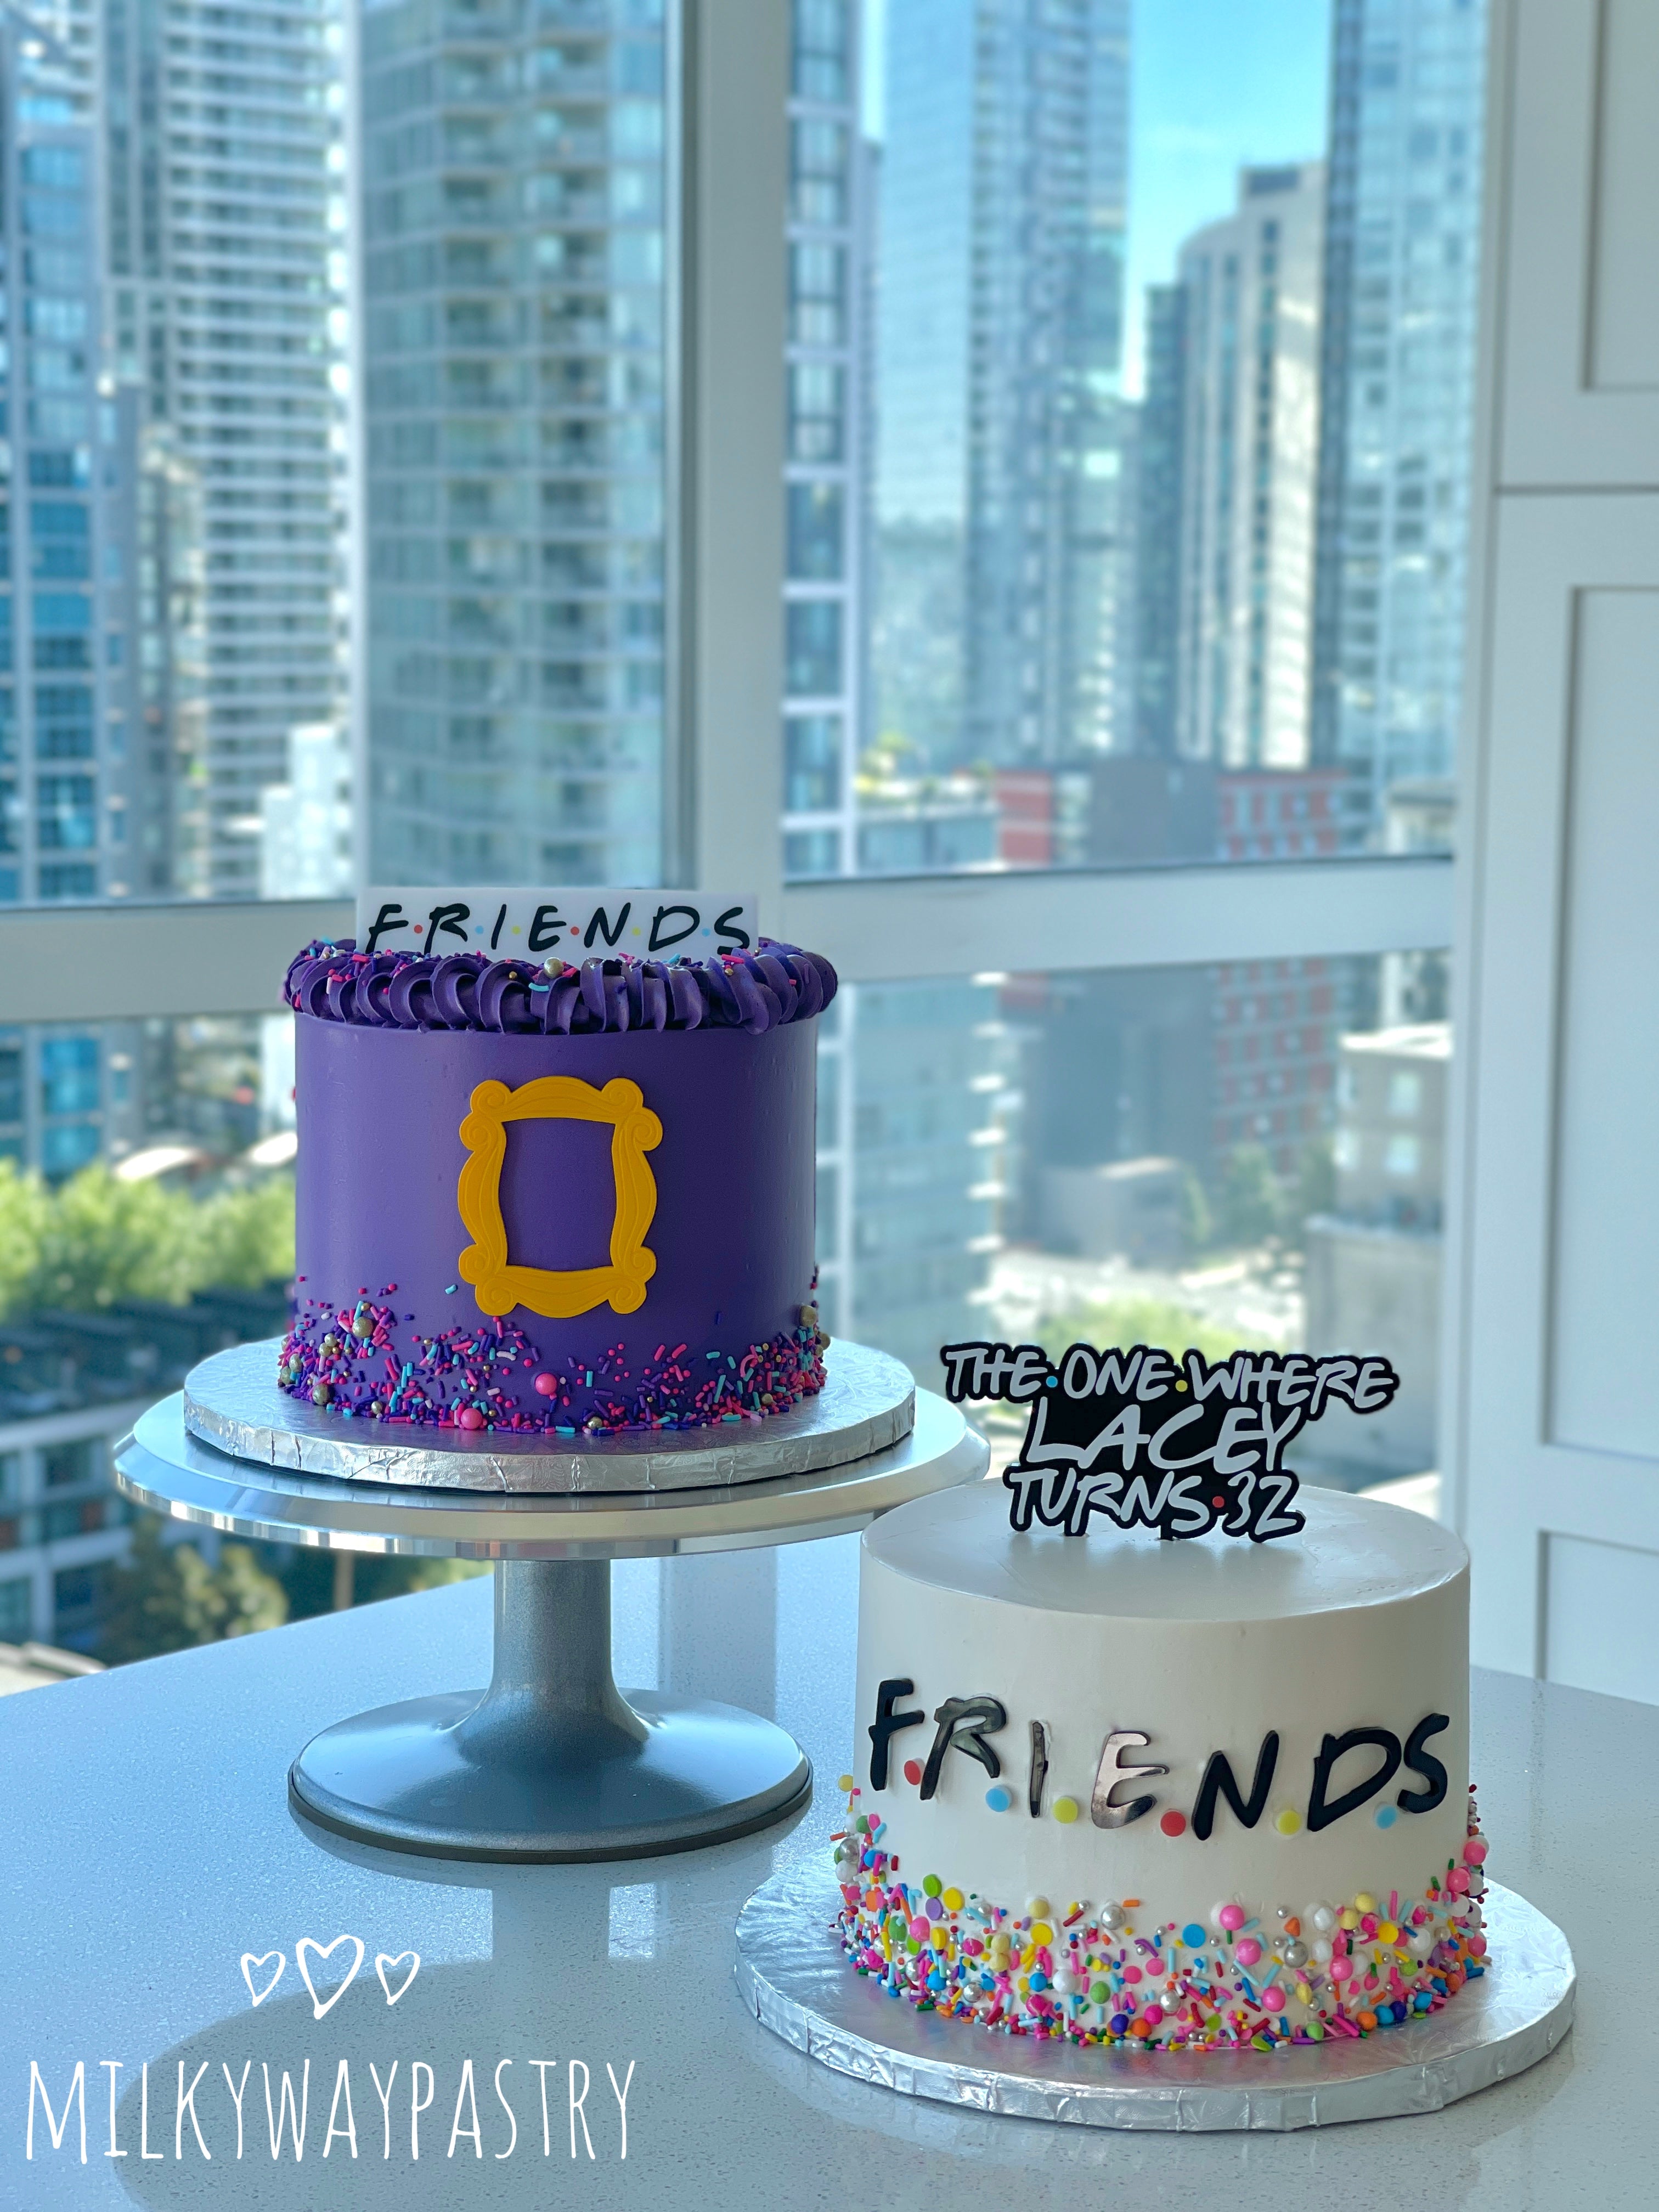 Purple Friends Cake – Creme Castle